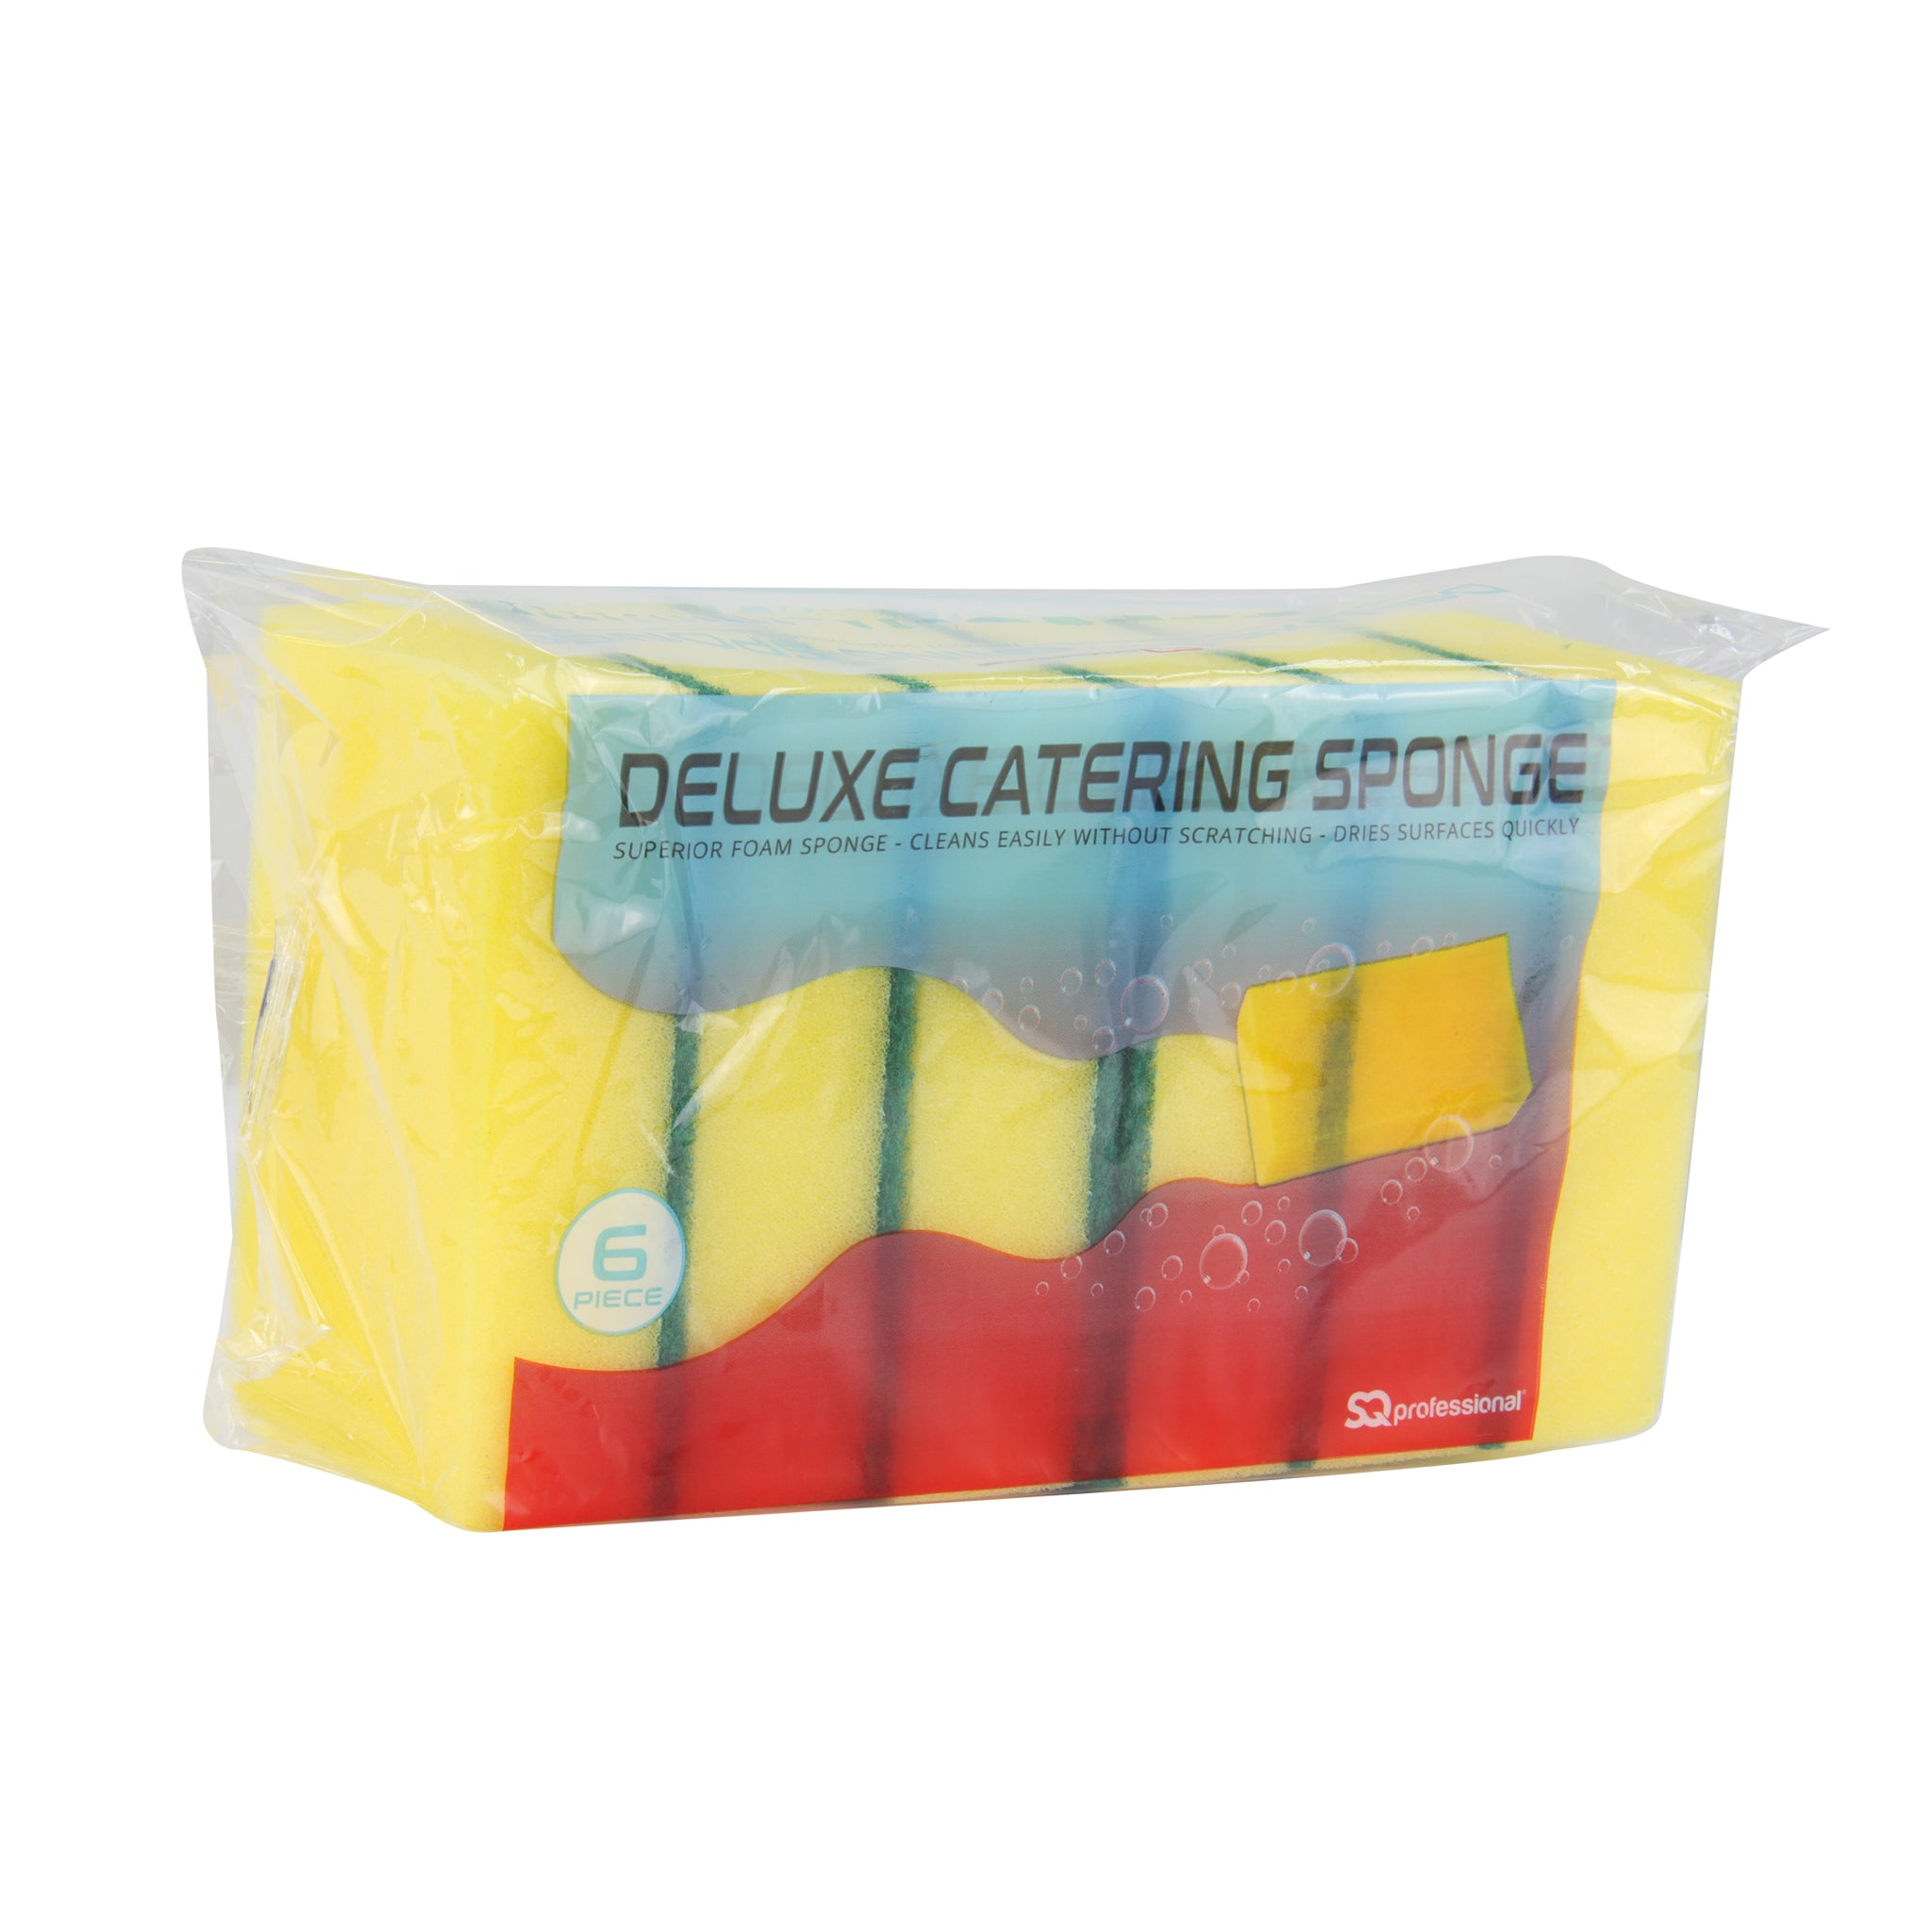 Deluxe Catering Sponge - 6 Pc Set